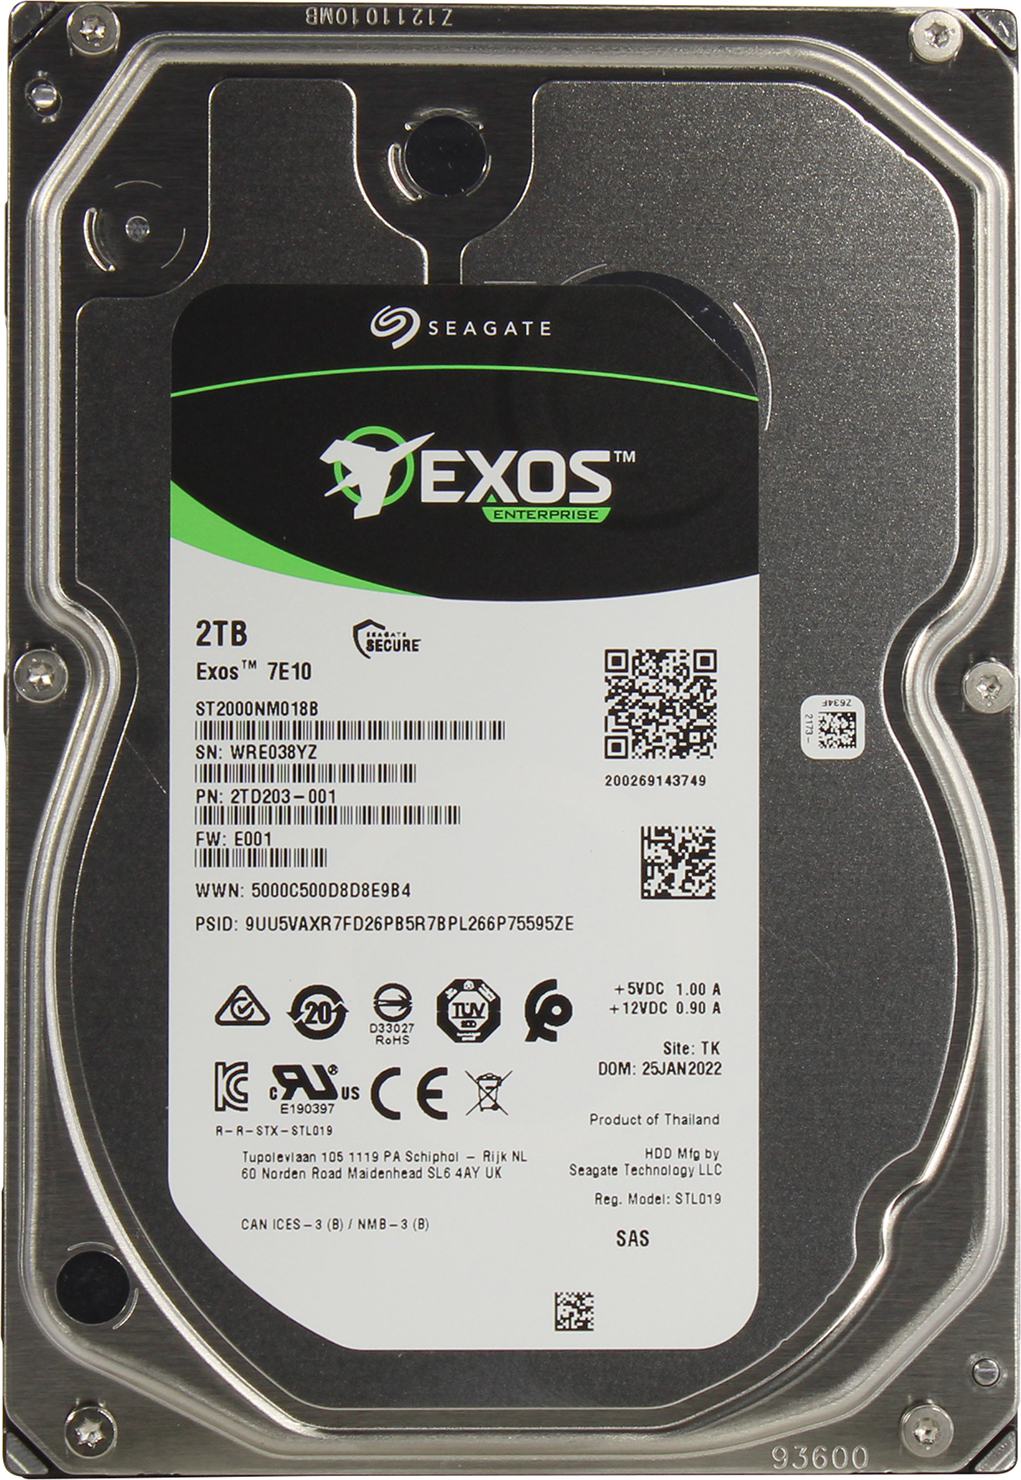 Жесткий диск Seagate 2Tb Exos 7E10 2TB  512E/4kn SAS ST2000NM018B ST2000NM018B